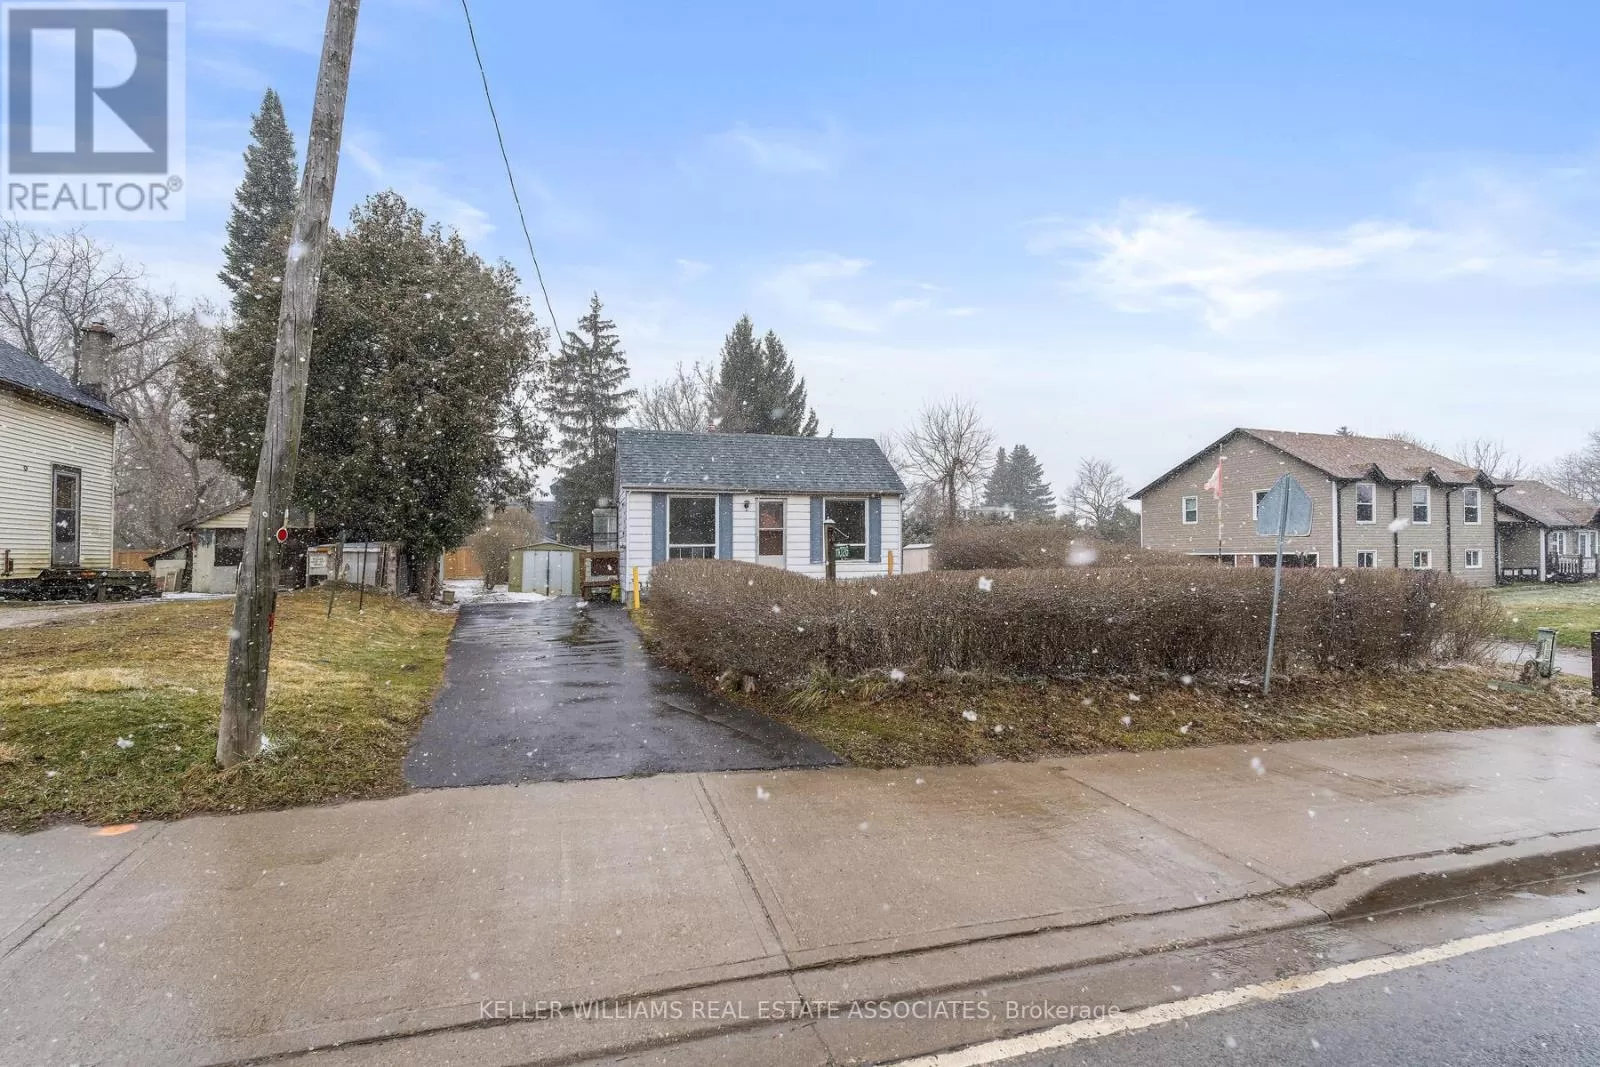 House for rent: 11026 Trafalgar Rd S, Halton Hills, Ontario L7G 4S5